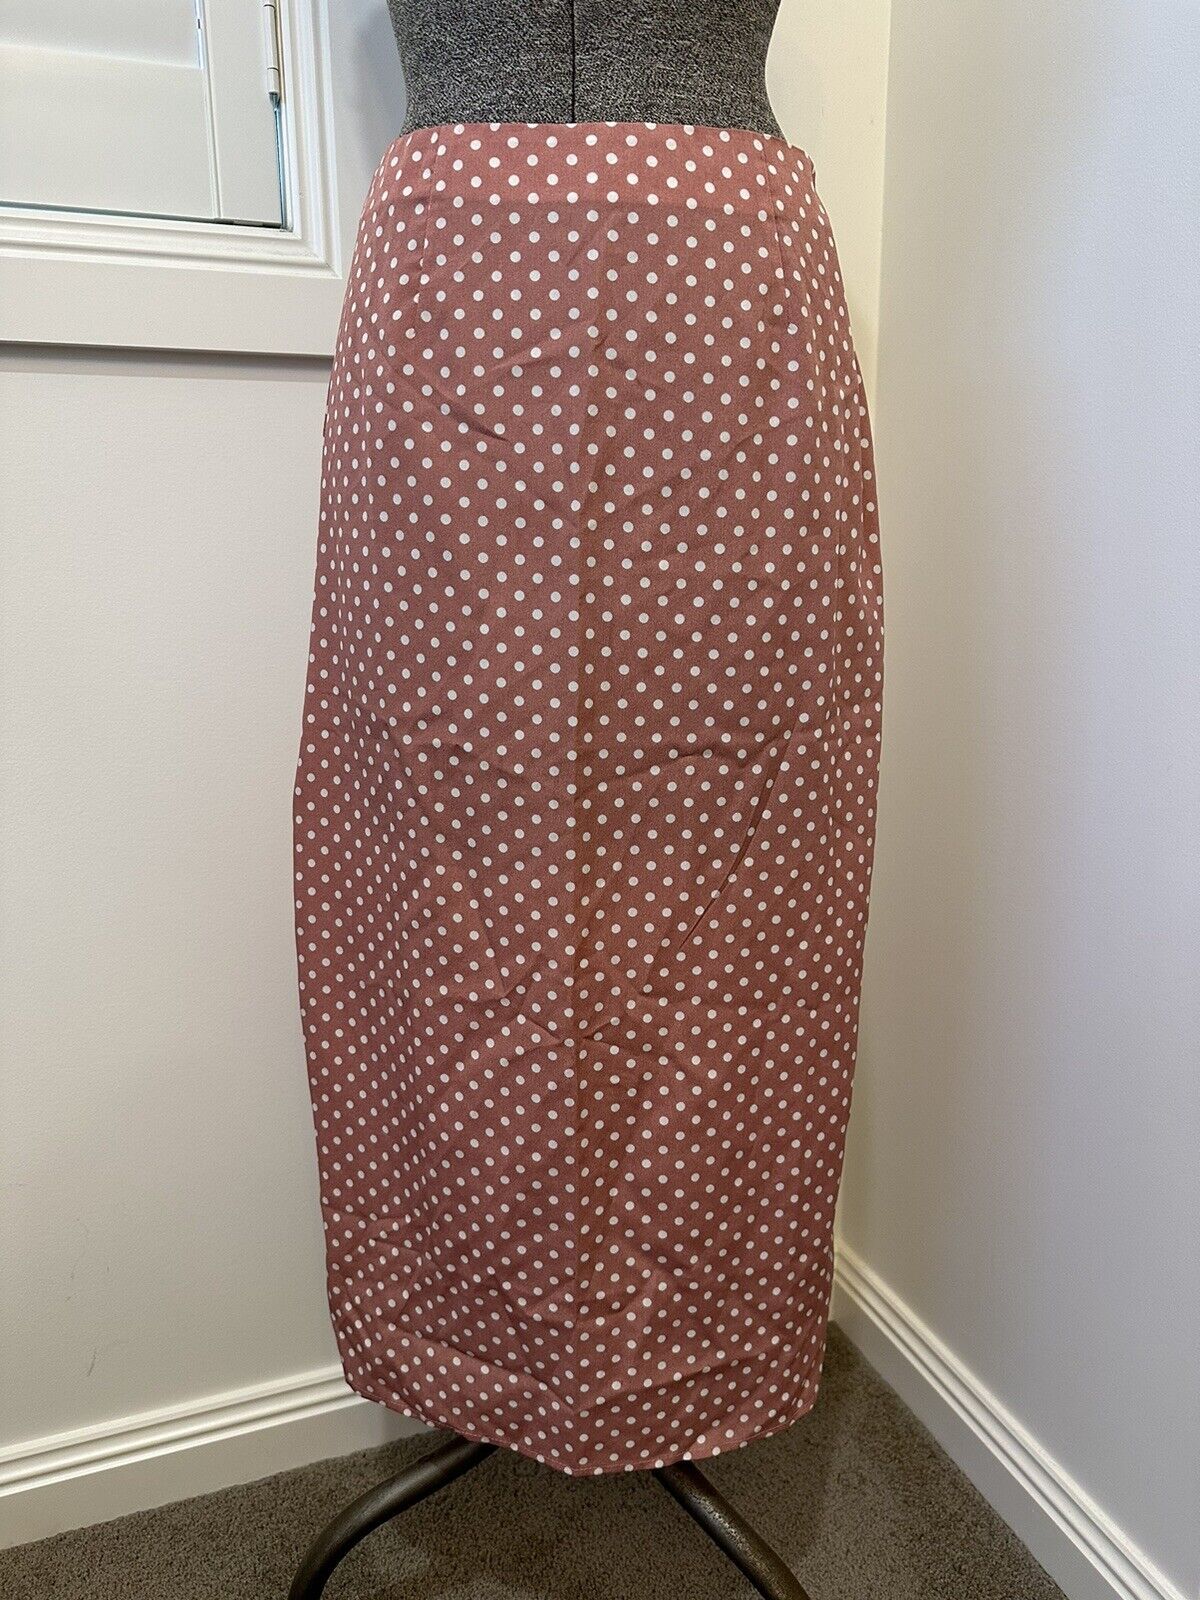 Atmos & Here Dusty Pink White Polka Dot Spot High Waist Long Maxi Skirt 10 M | eBay AU